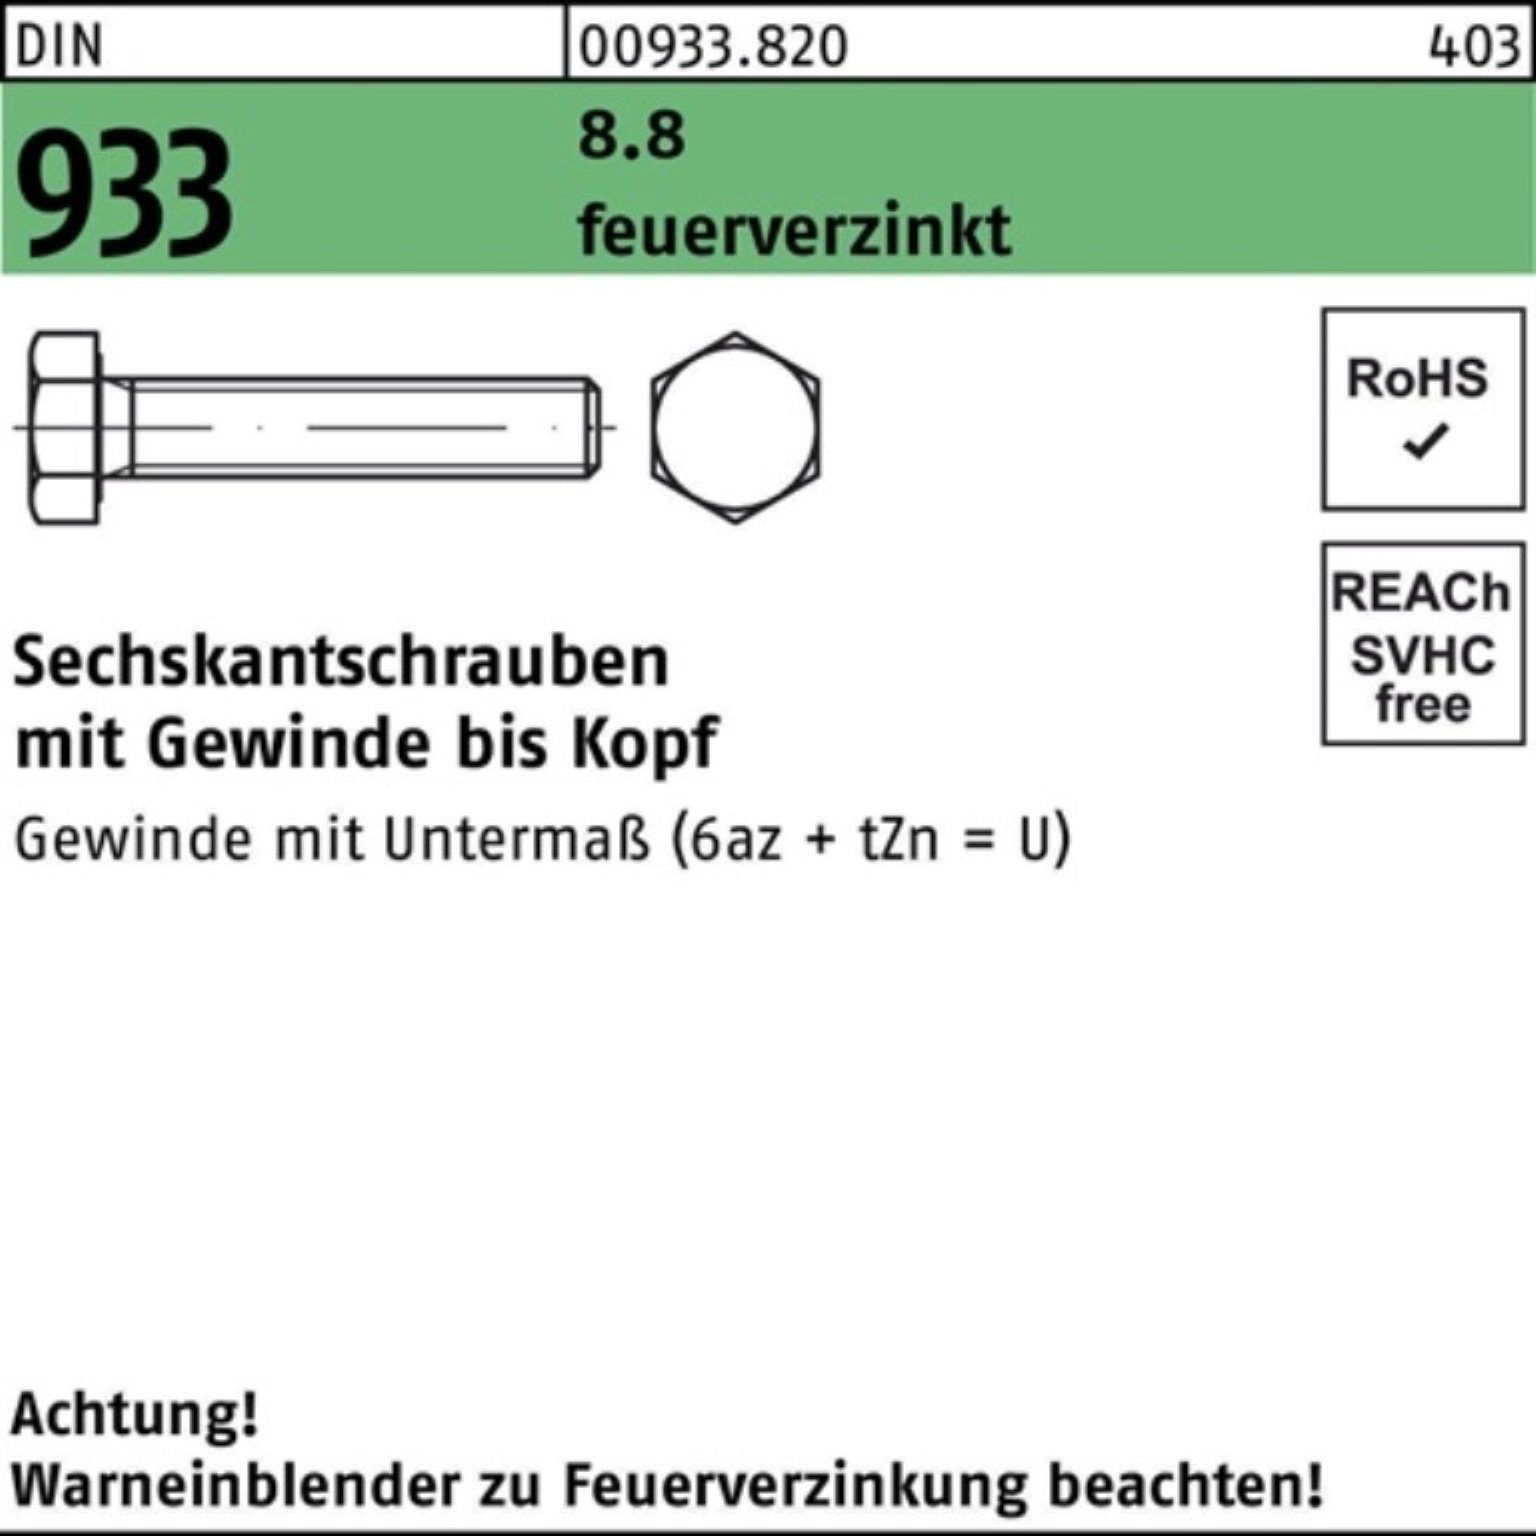 Reyher Sechskantschraube 100er M24x Sechskantschraube 933 40 DIN VG Pack 8.8 feuerverz. 25 Stü